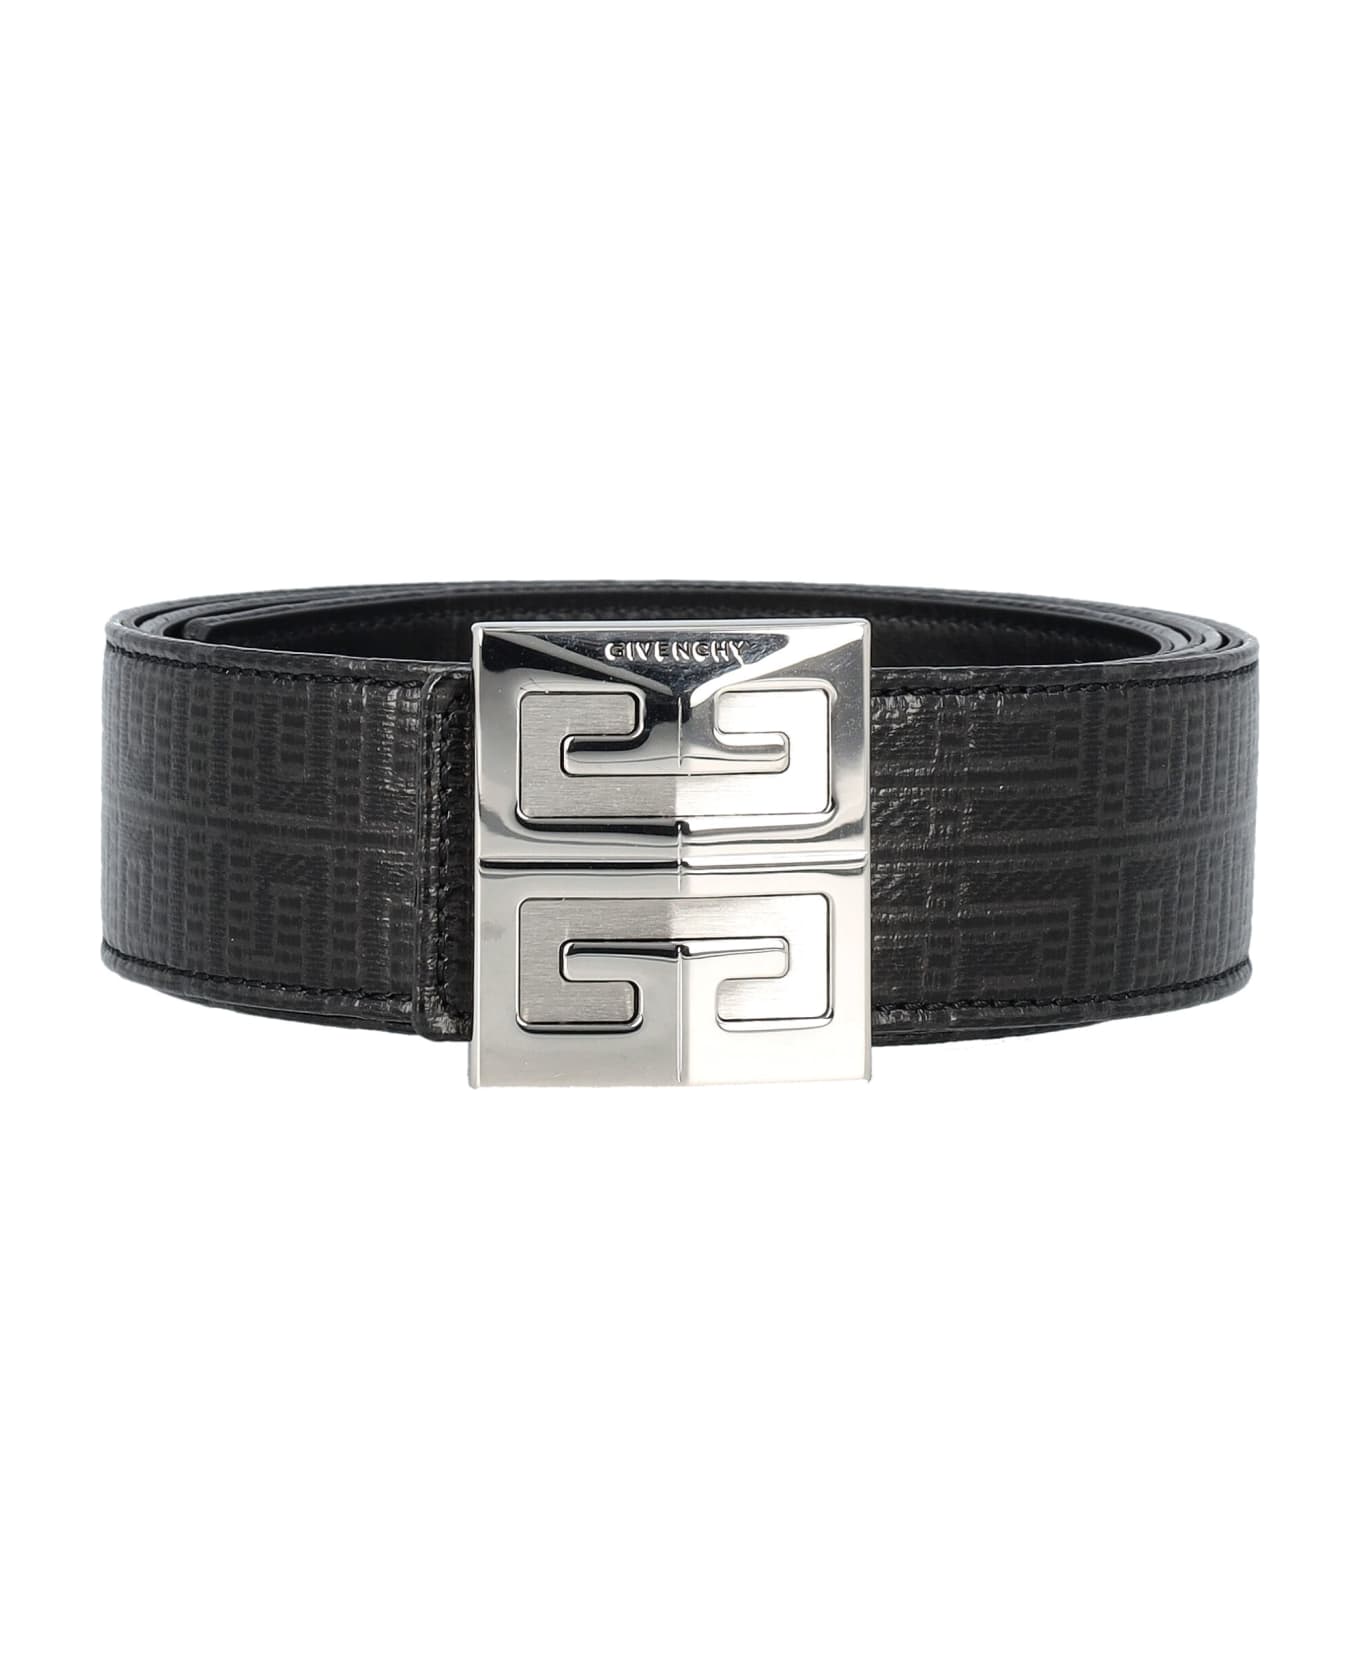 Givenchy 4g Reversible Belt 40mm - BLACK ベルト